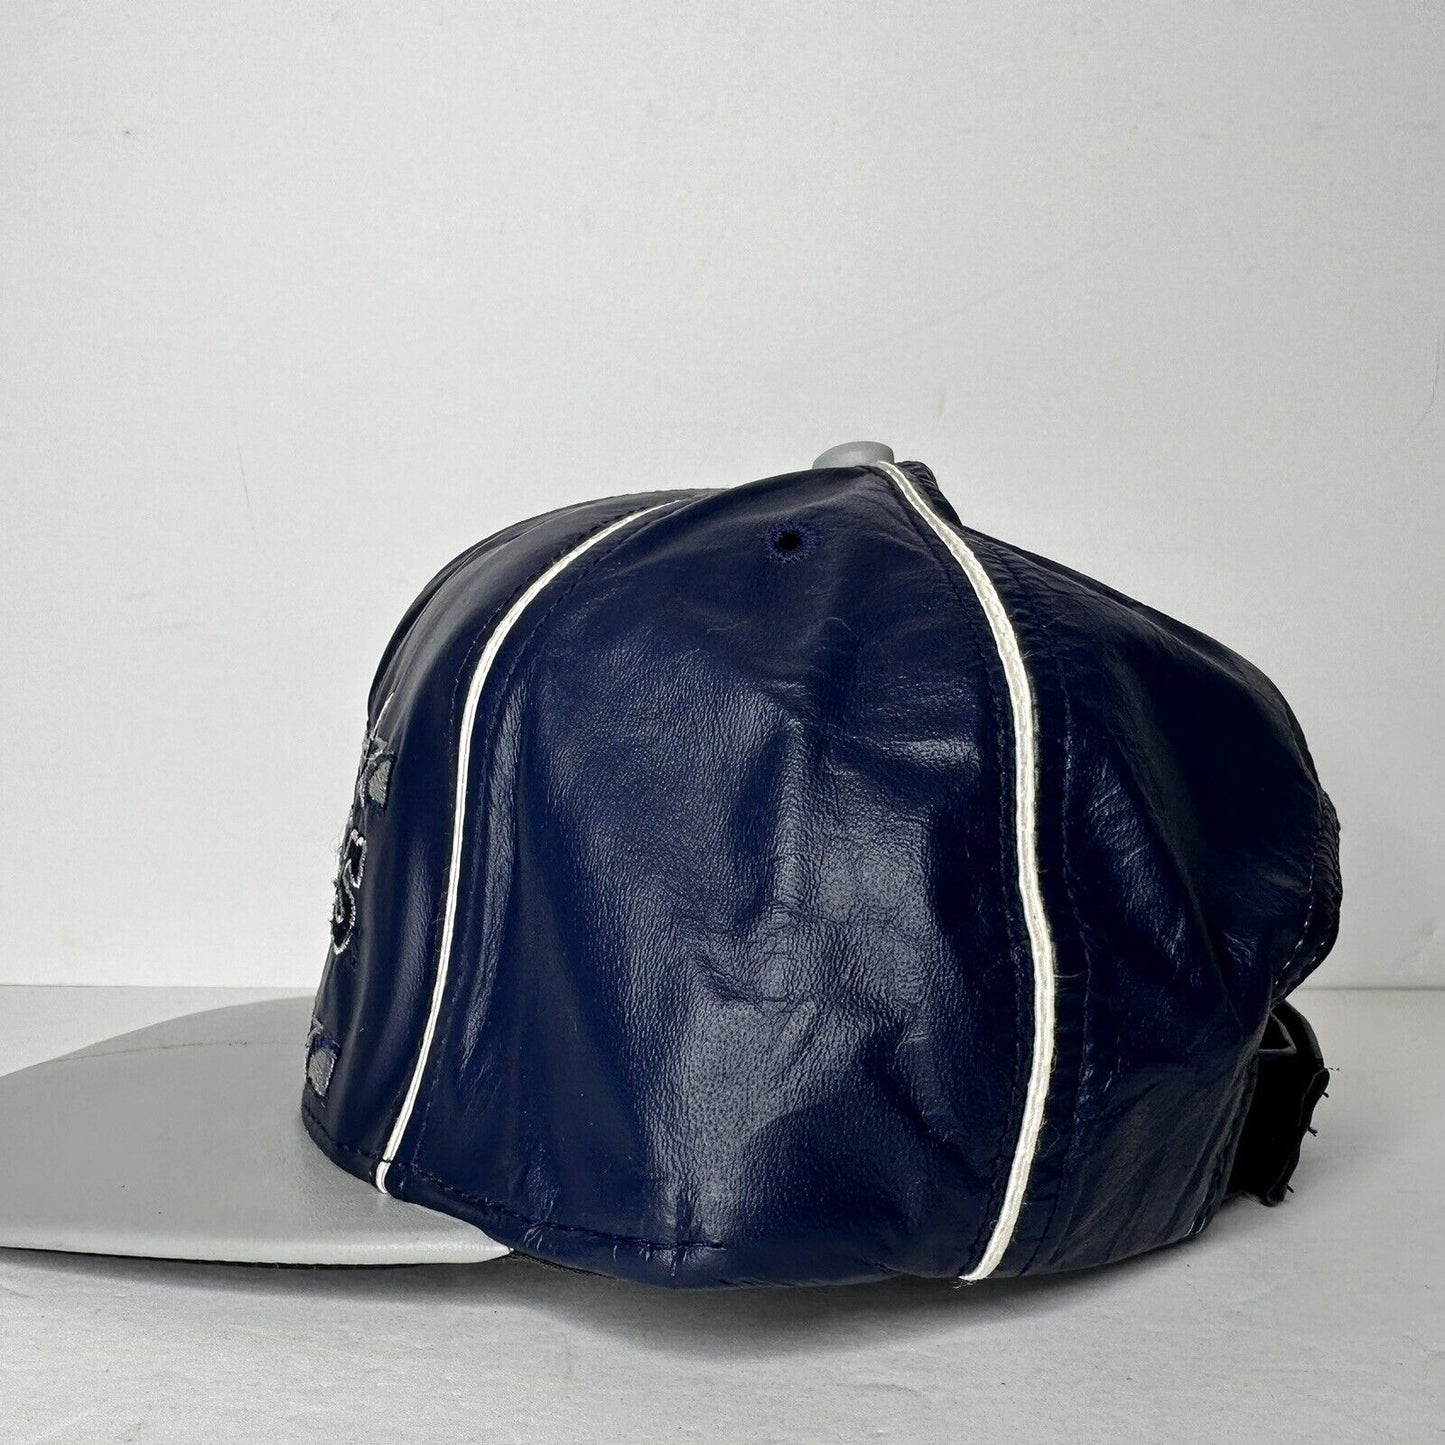 Vintage Dallas Cowboys James Hamilton Leather Hat - Embroidered Blue & Gray Cap with Scratch - TreasuTiques